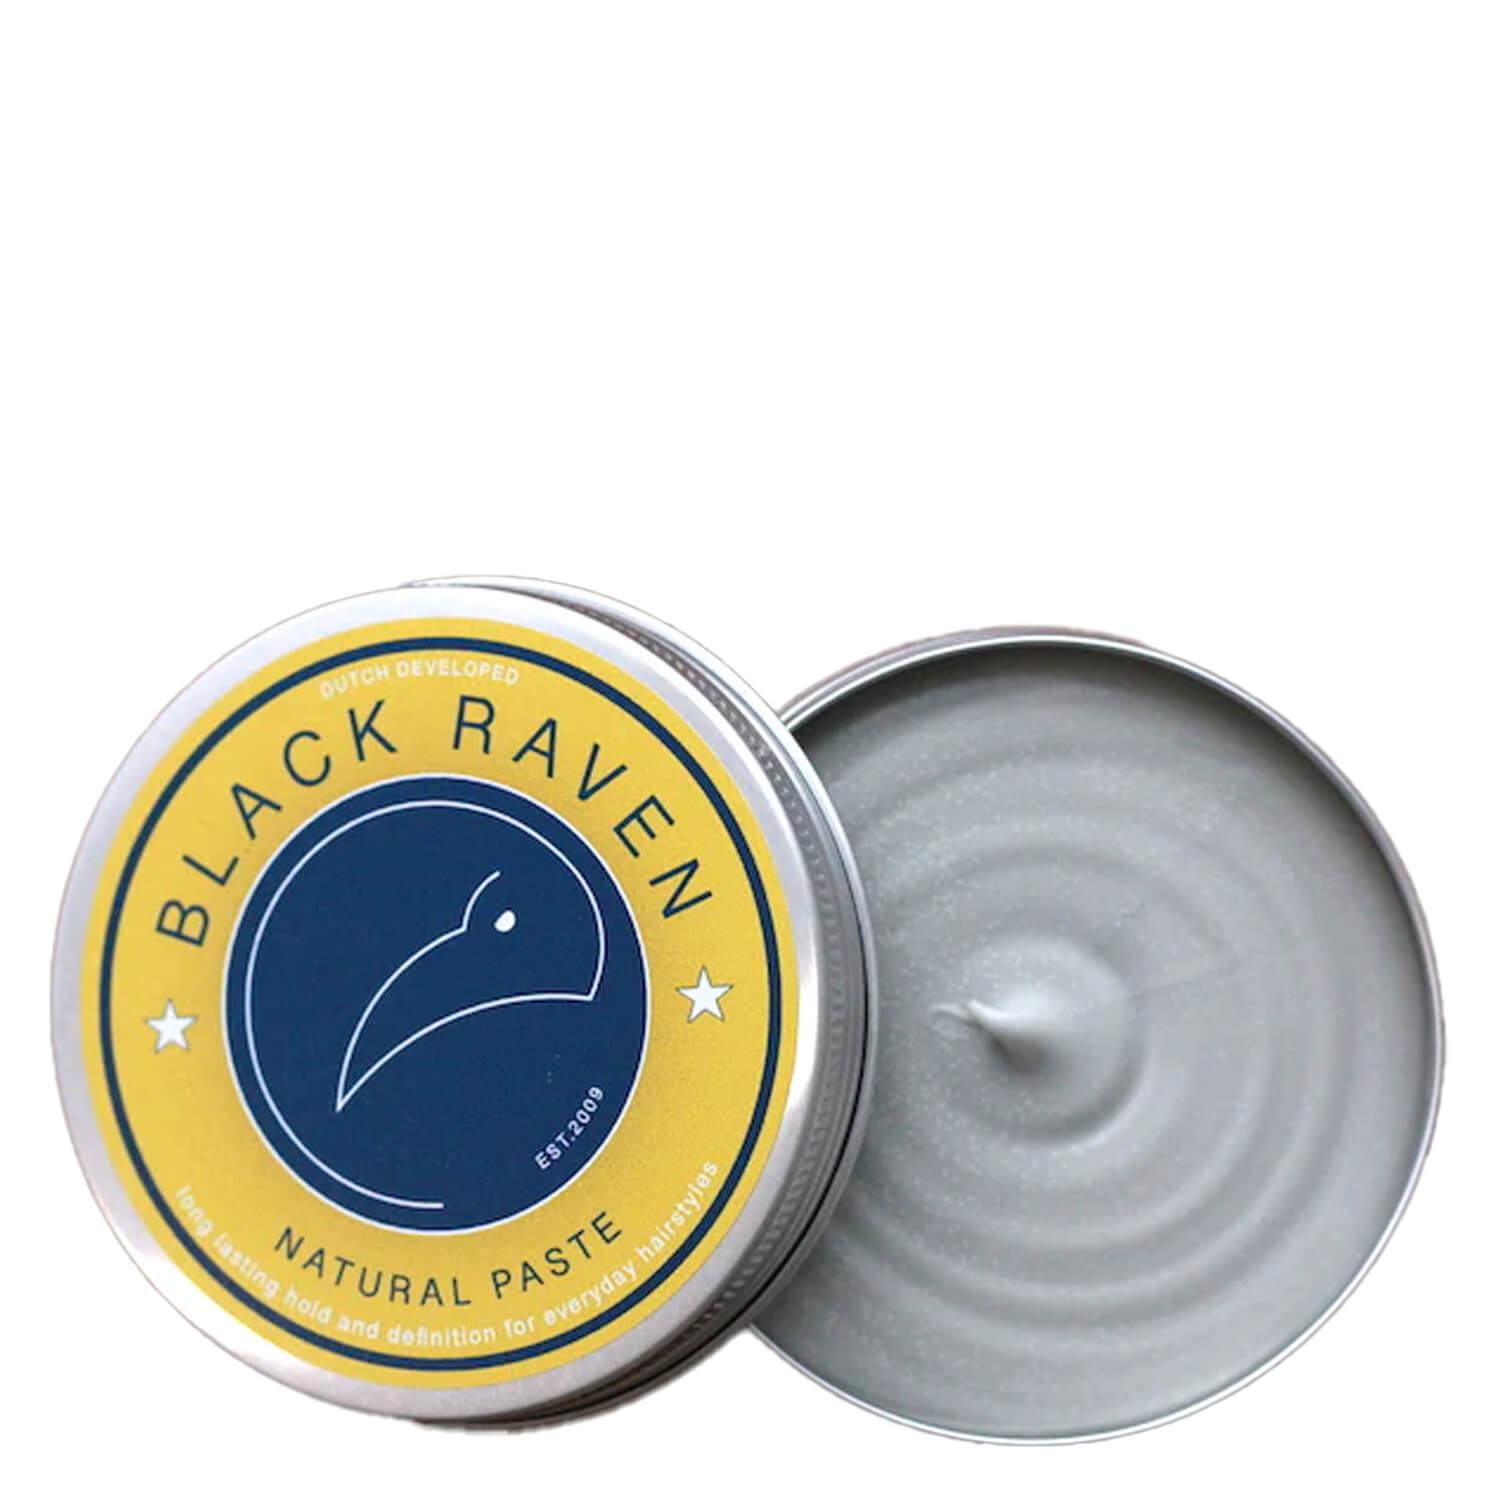 BLACK RAVEN - Natural Paste